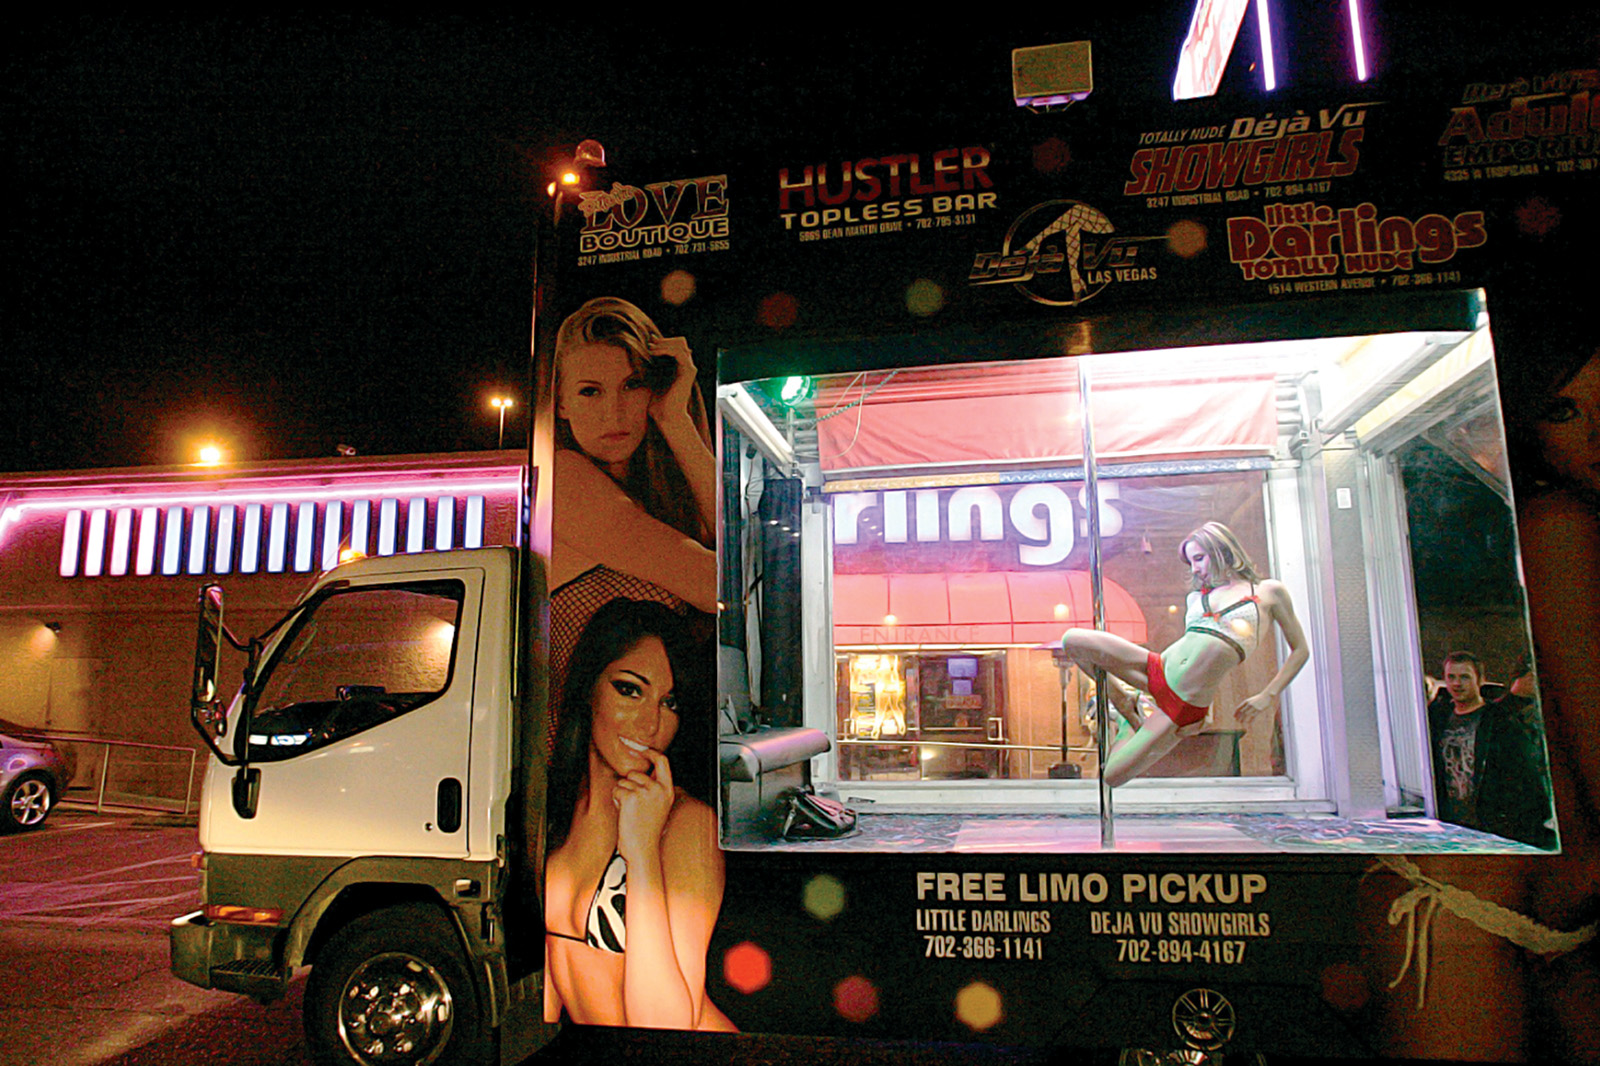 Mobile stripper advertising in Las Vegas.